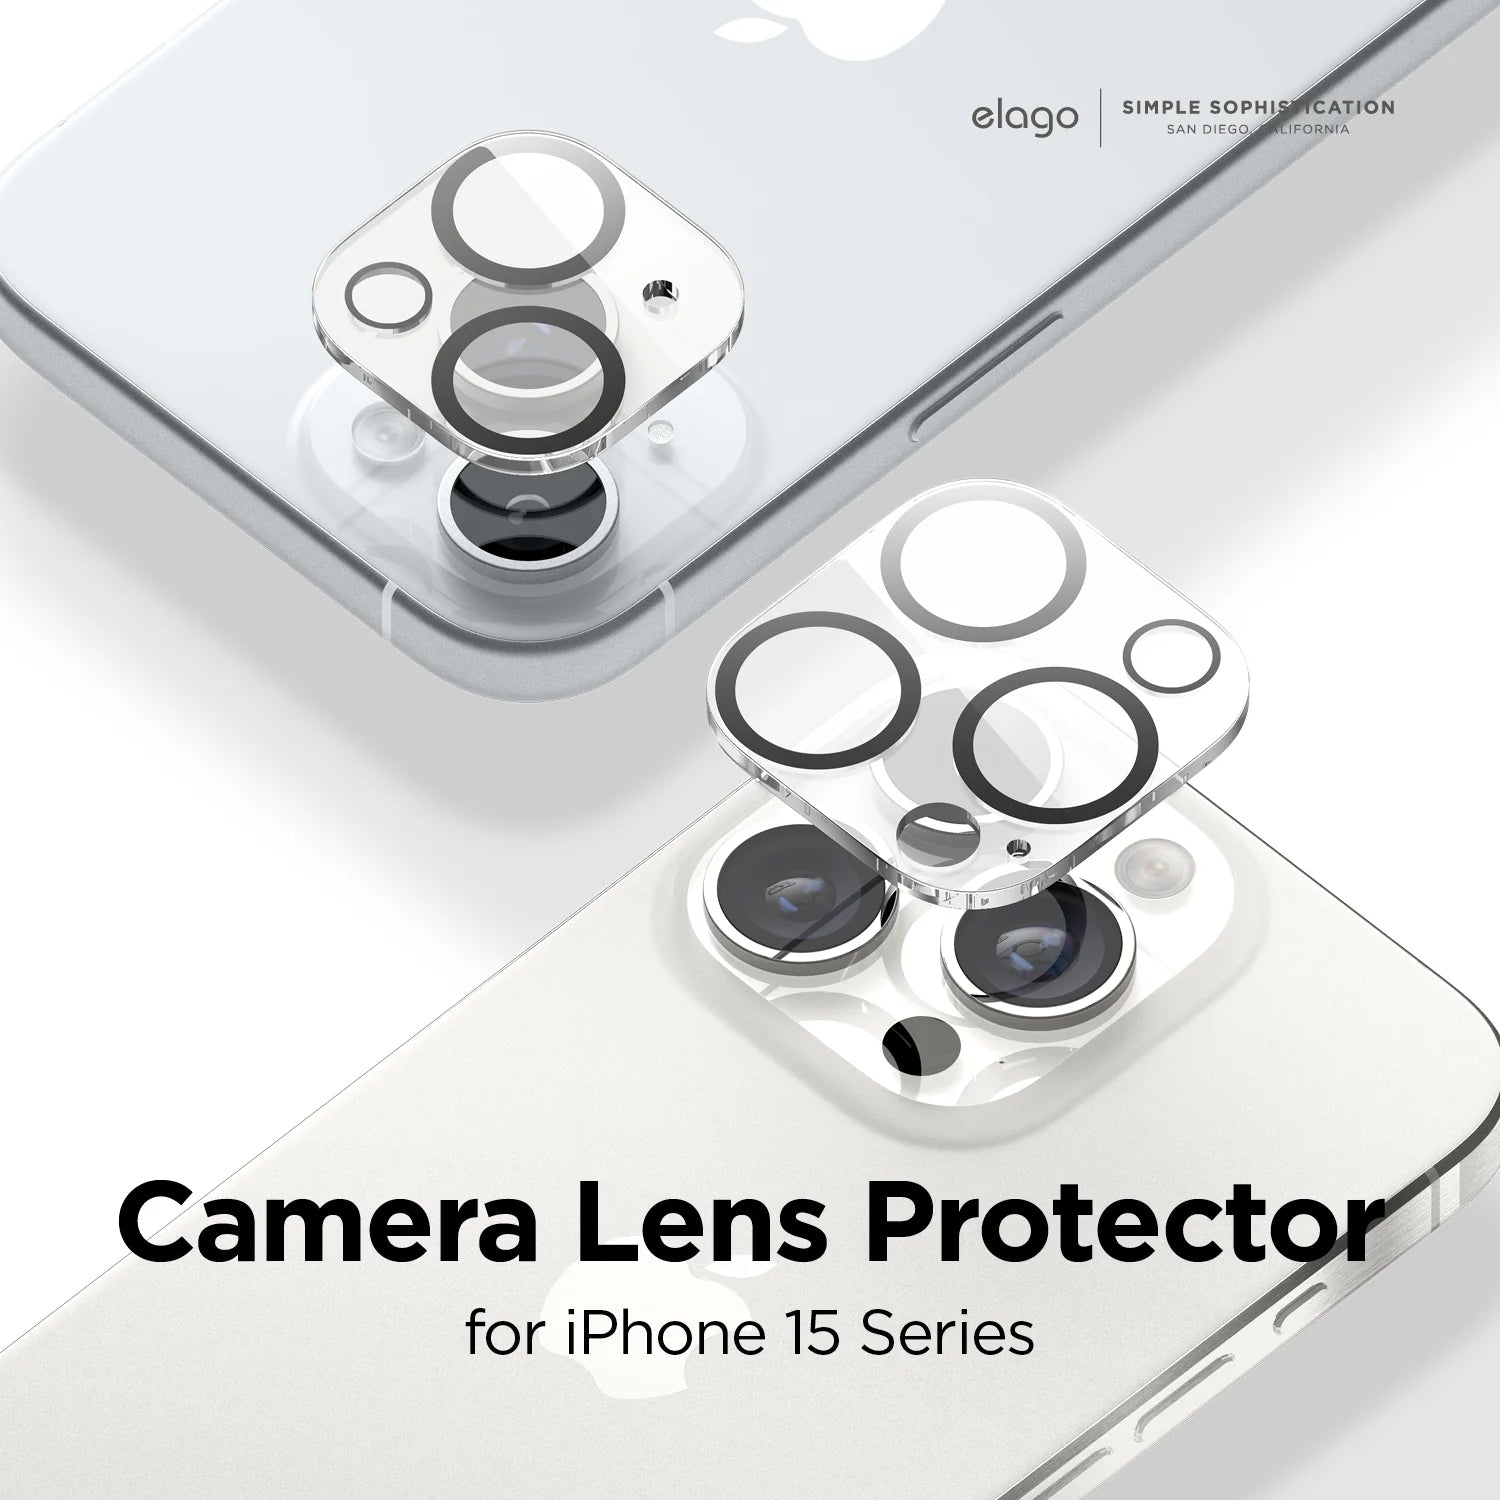 elago Camera Lens Protector for iPhone 15 Pro/15 Pro Max